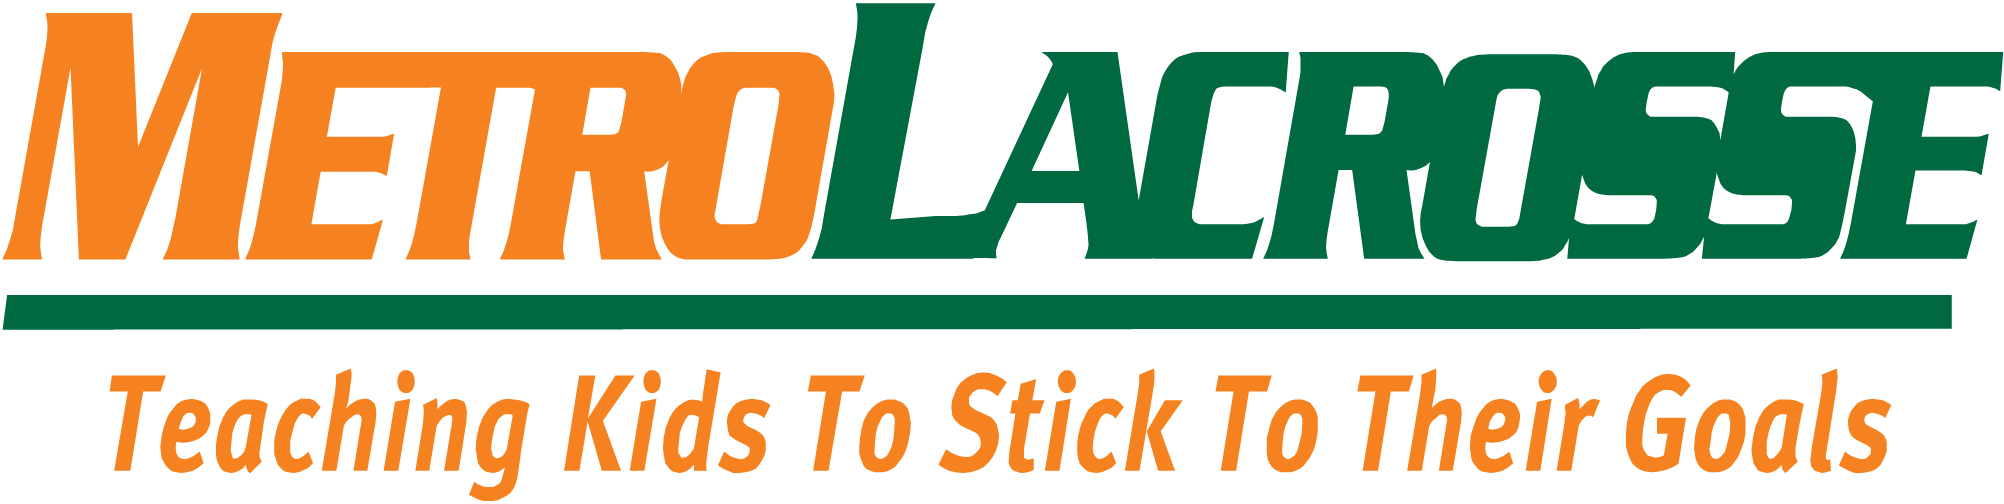 MetroLacrosse Logo